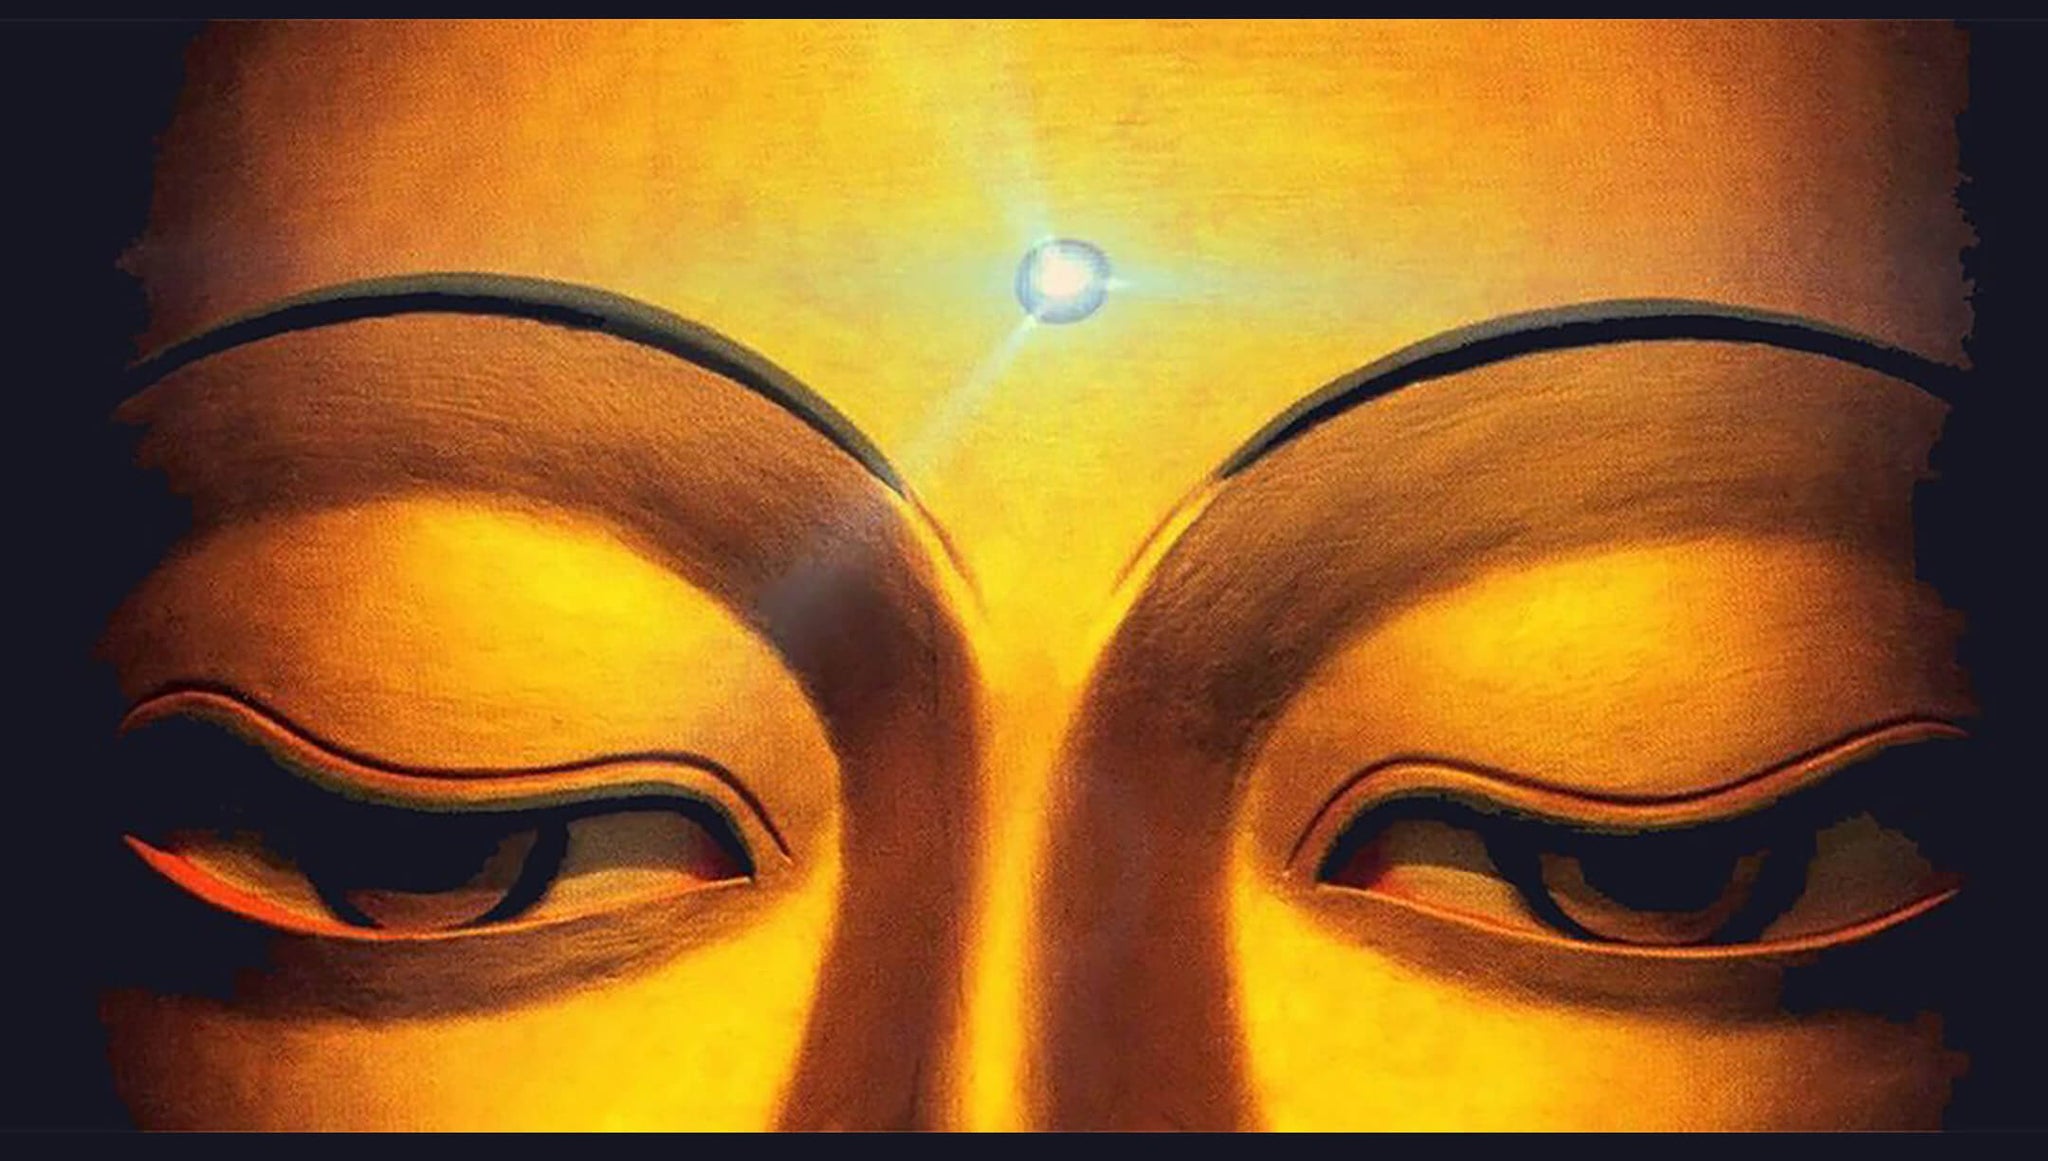 Bedeutung des dritten Auges bei Buddha-Darstellungen